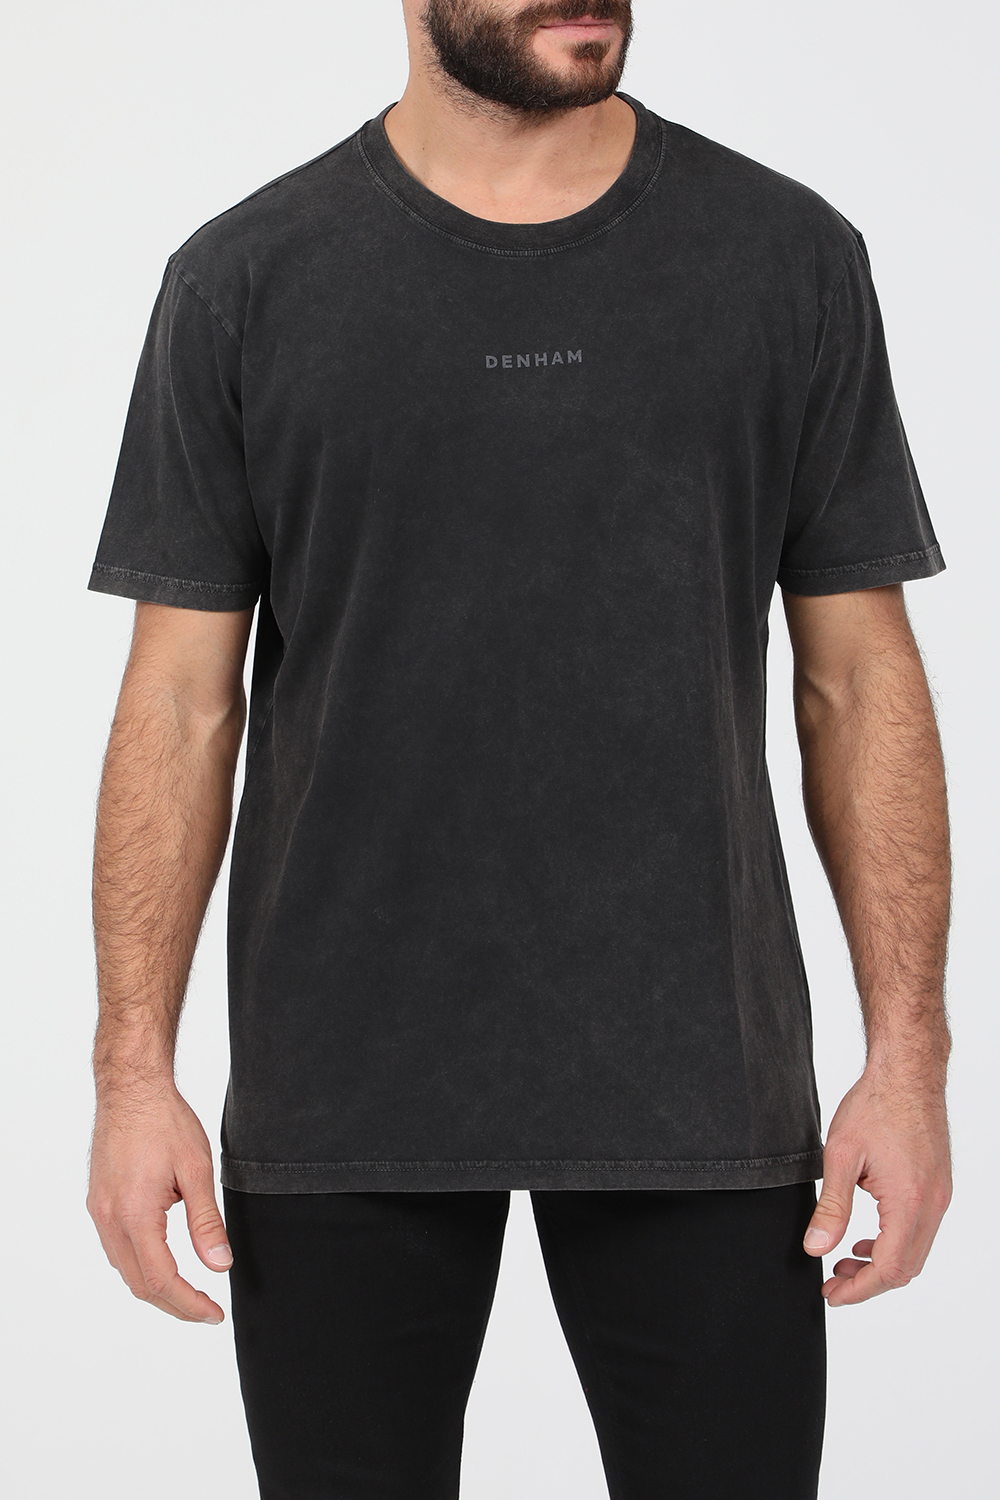 DENHAM – Ανδρικό t-shirt DENHAM ROGER ανθρακί 1823108.0-0101